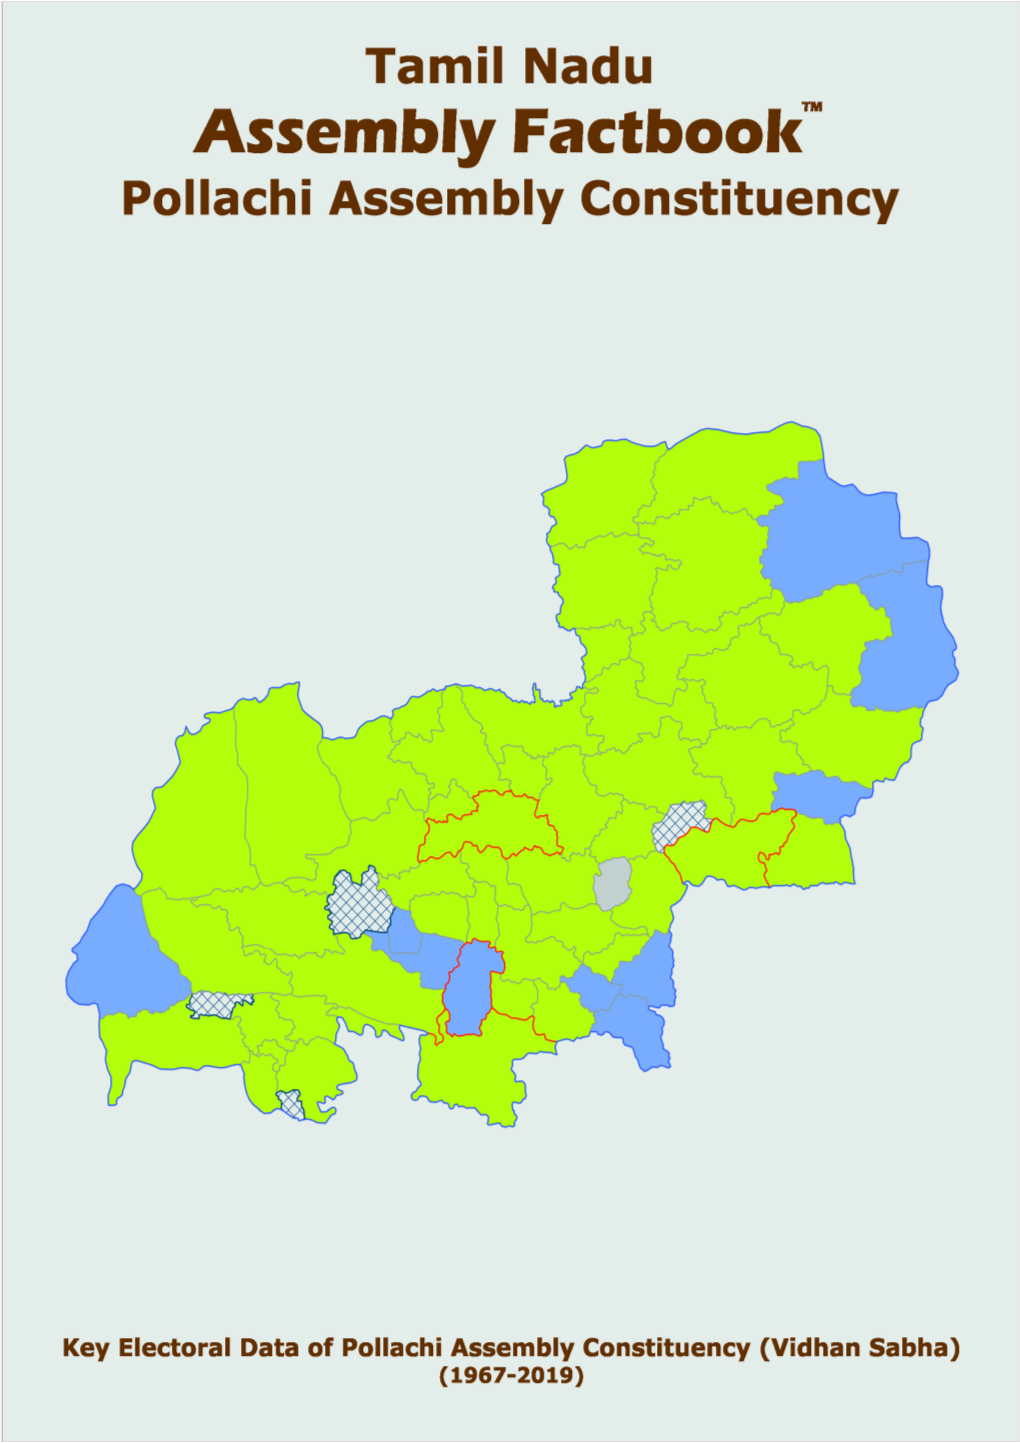 Pollachi Assembly Tamil Nadu Factbook